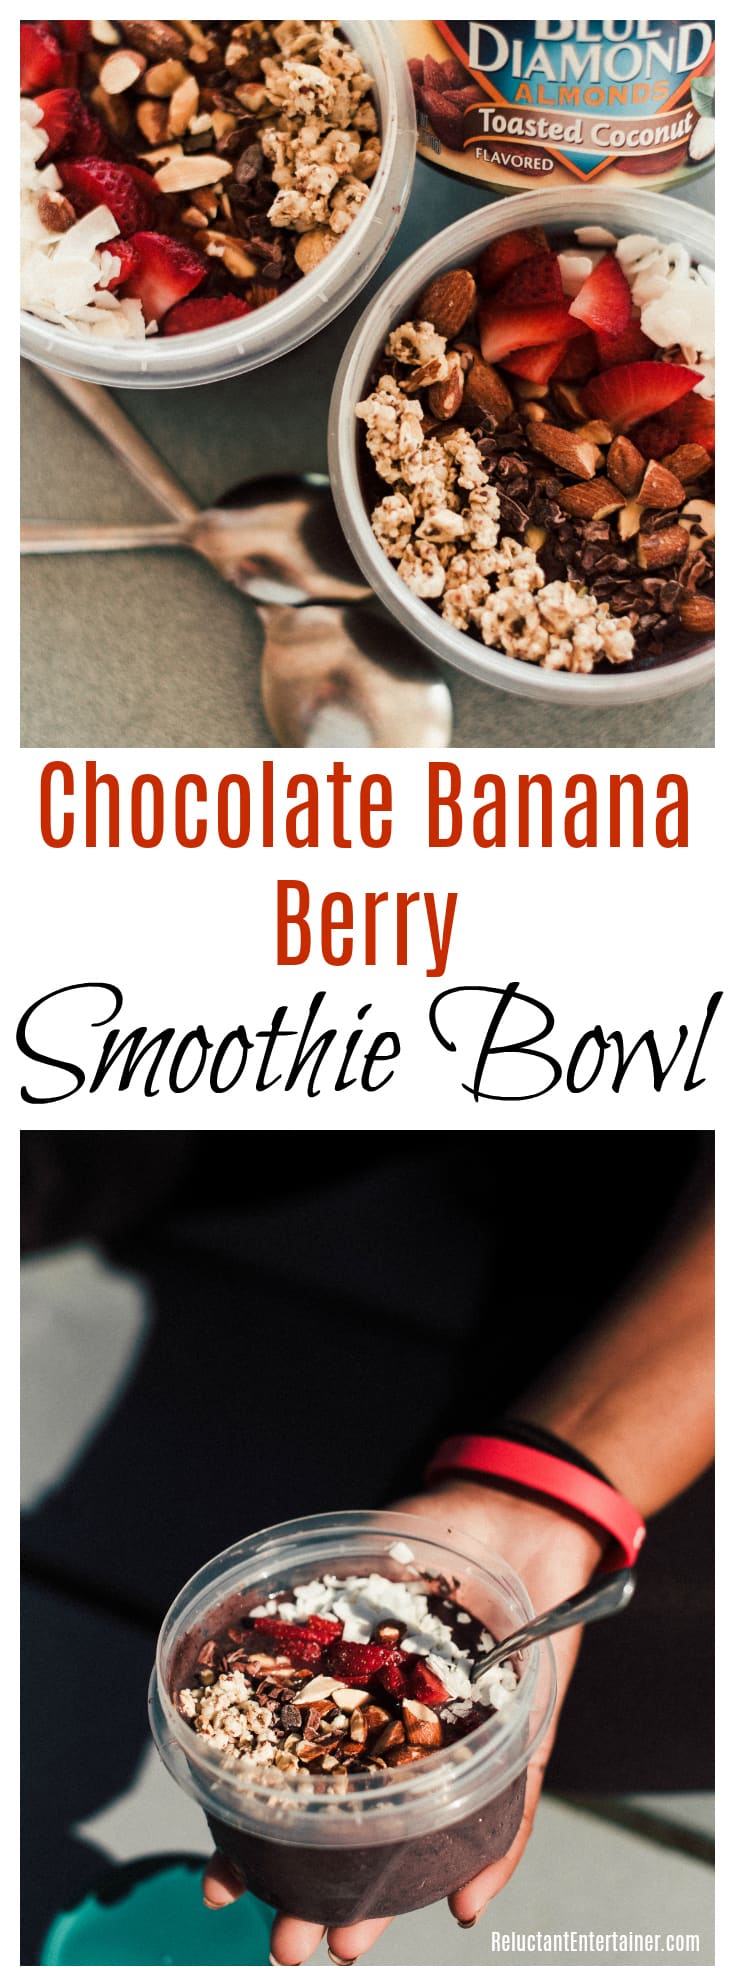 Chocolate Banana Berry Smoothie Bowl Recipe in partnership with Blue Diamond Almonds